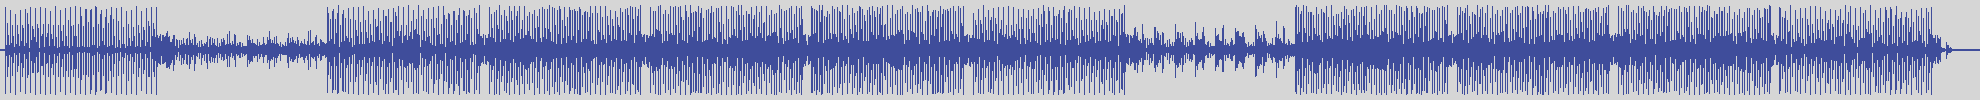 nf_boyz_records [NFY061] Blue House - Funky Feel [Original Mix] audio wave form